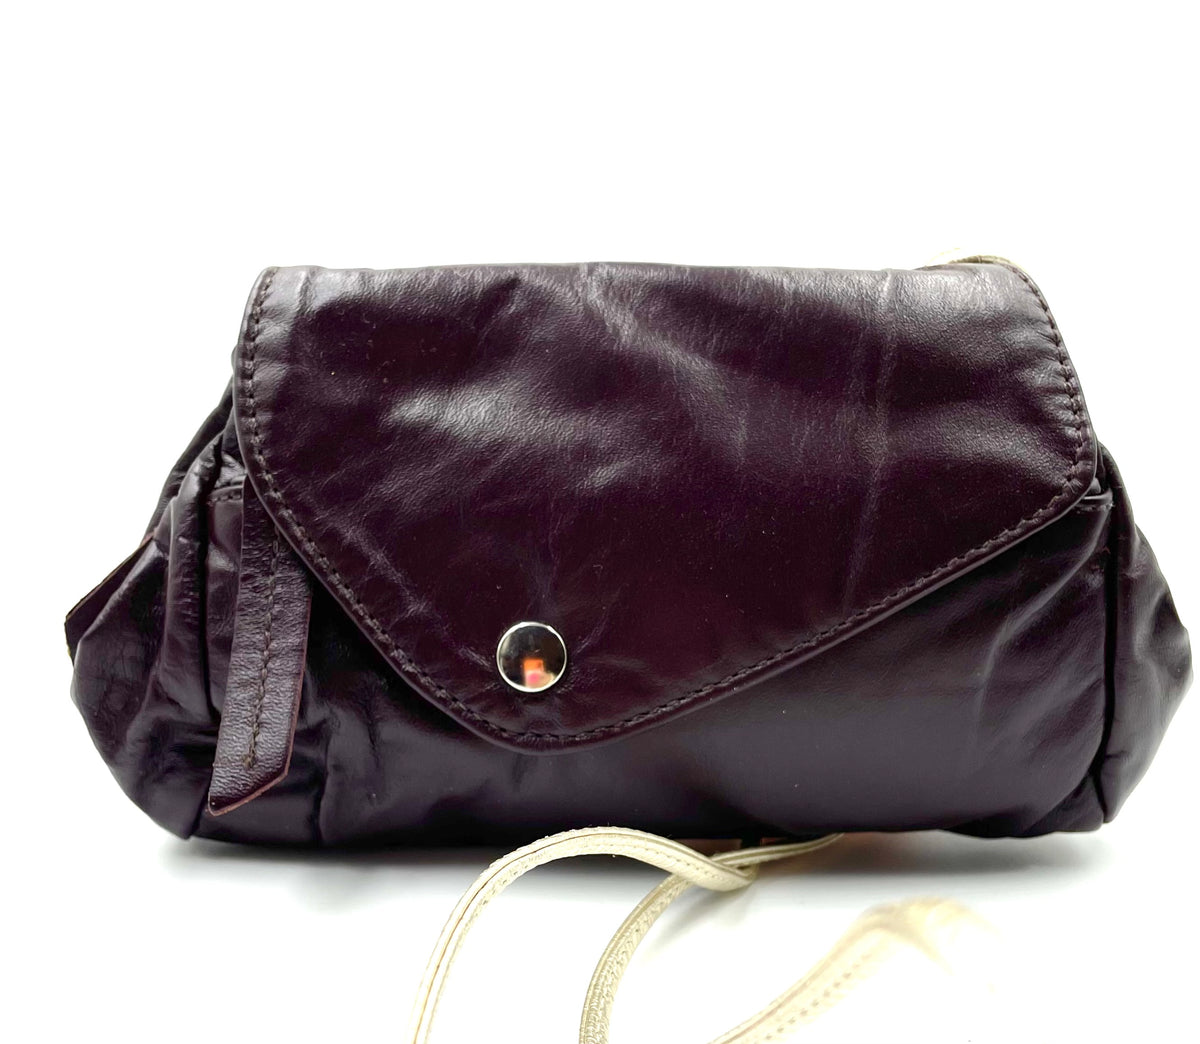 Sofia Premium Leather Crossbody Bag in Oxblood Patent